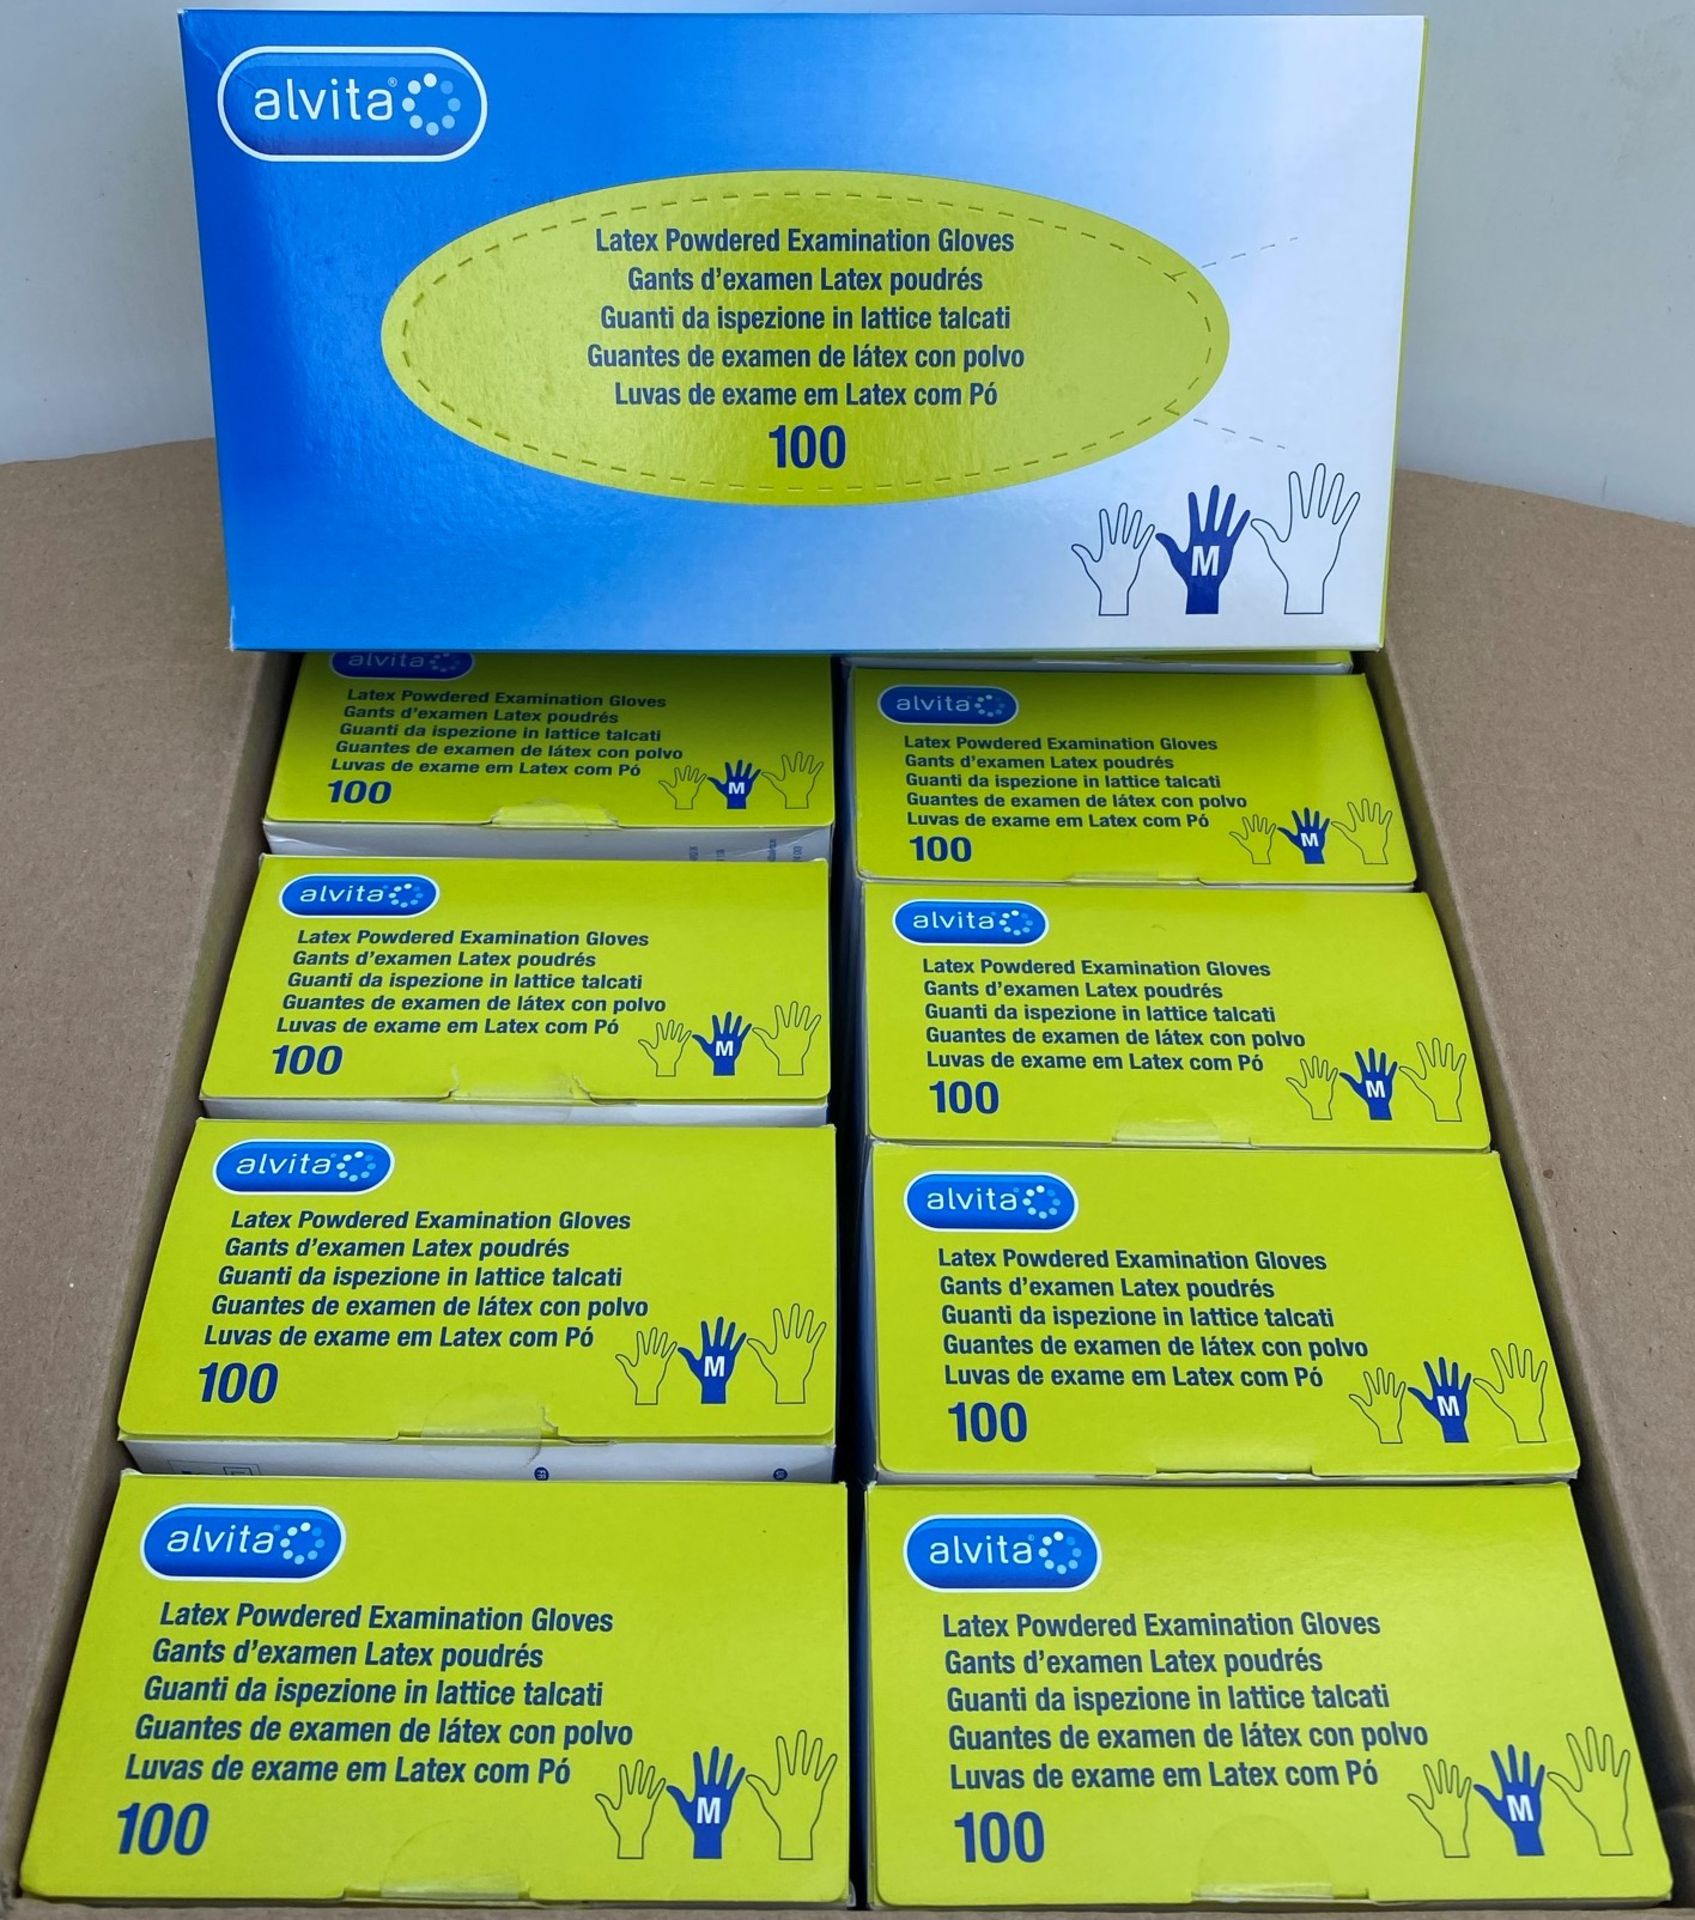 10 x boxes of 100 x Alvita Latex Powdered Examination Gloves - Size Medium - (1 outer box)